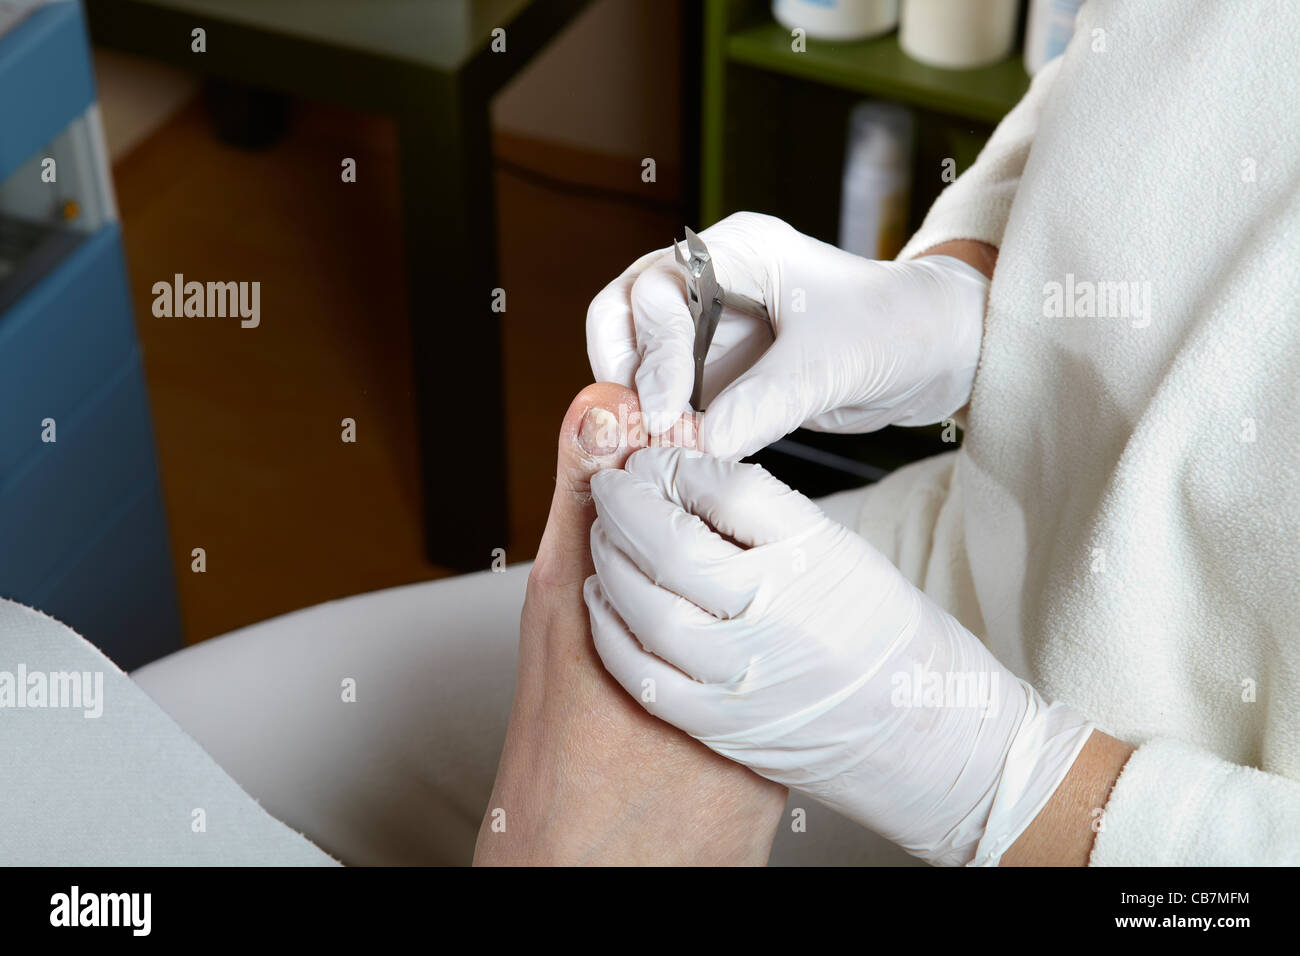 A Podiatrist cut the toenails of a woman Stock Photo